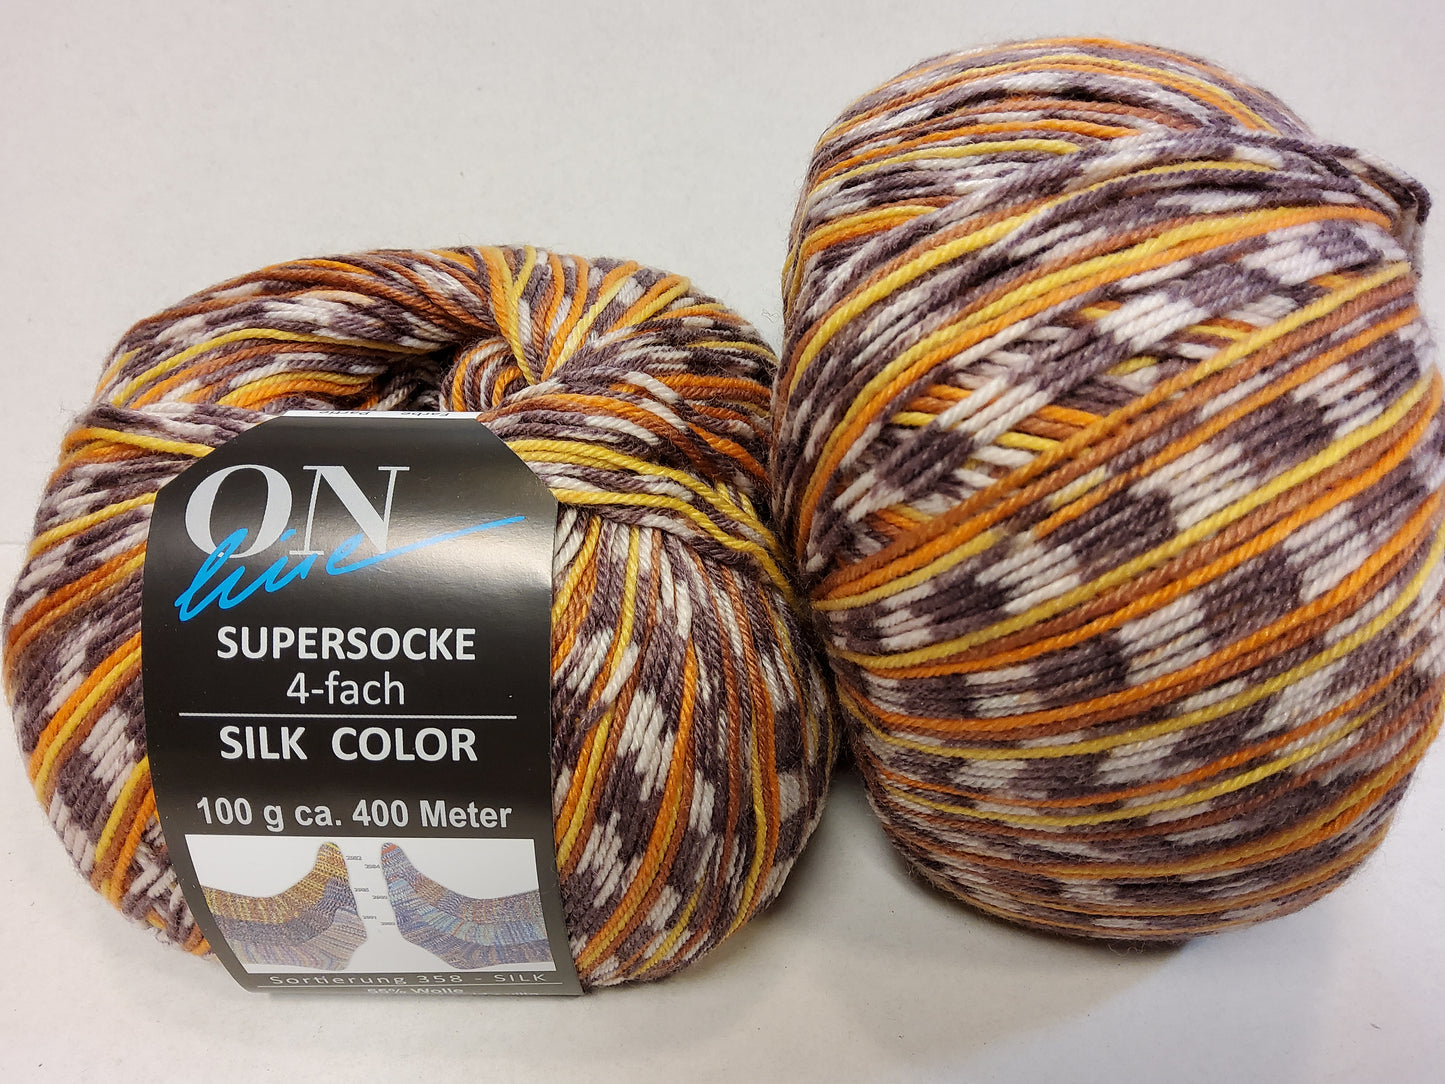 Supersocke 4 fach Silk Color Sortierung 358